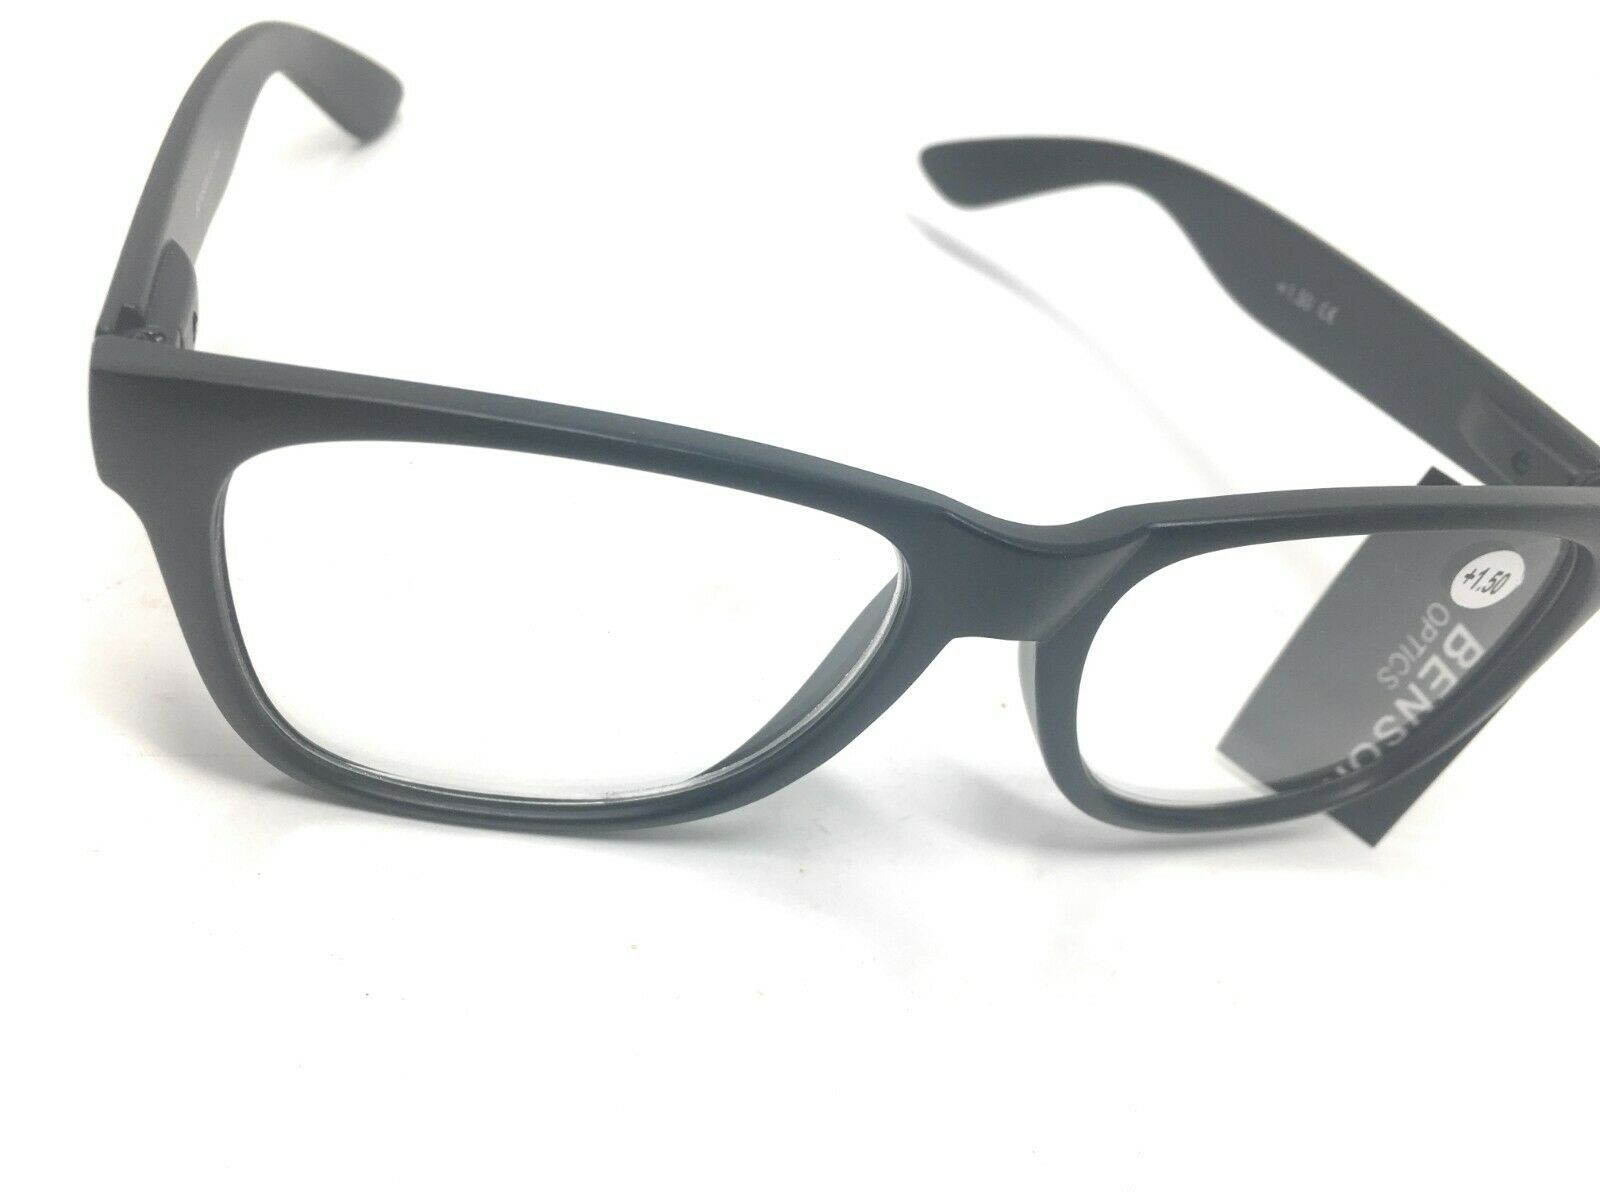 1 x Lesebrille schwarz Lesehilfe Sehhilfe Kunststoff Brille Vollrahmen 1,5 - fenster-bayram